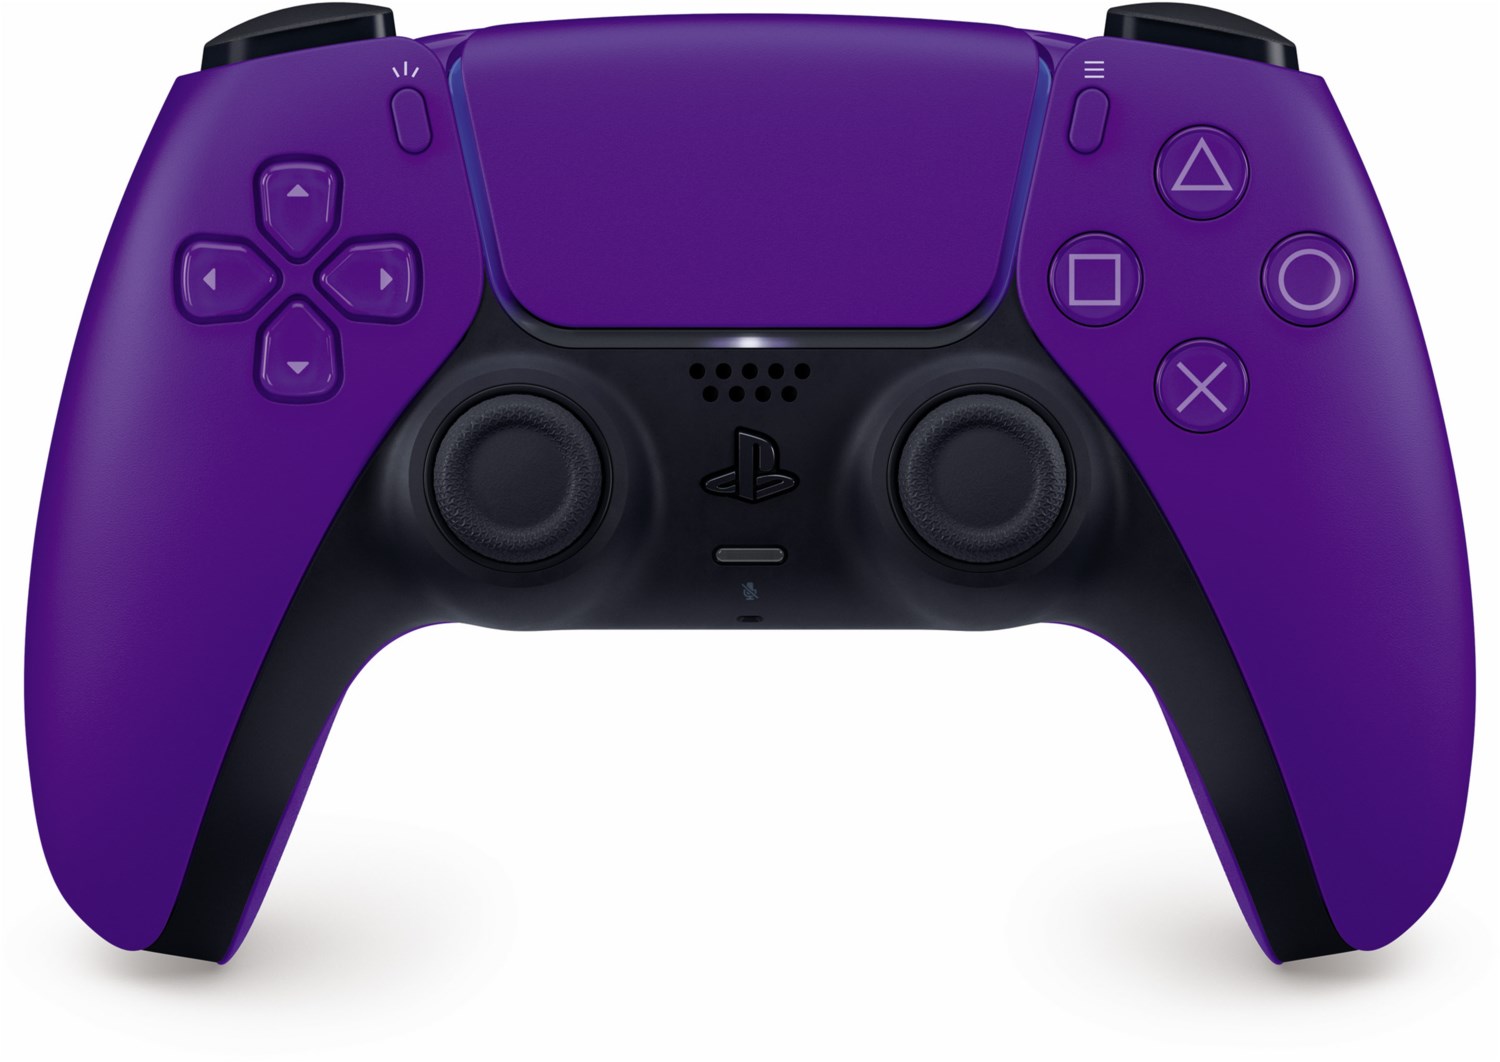 DualSense Wireless-Controller galactic purple